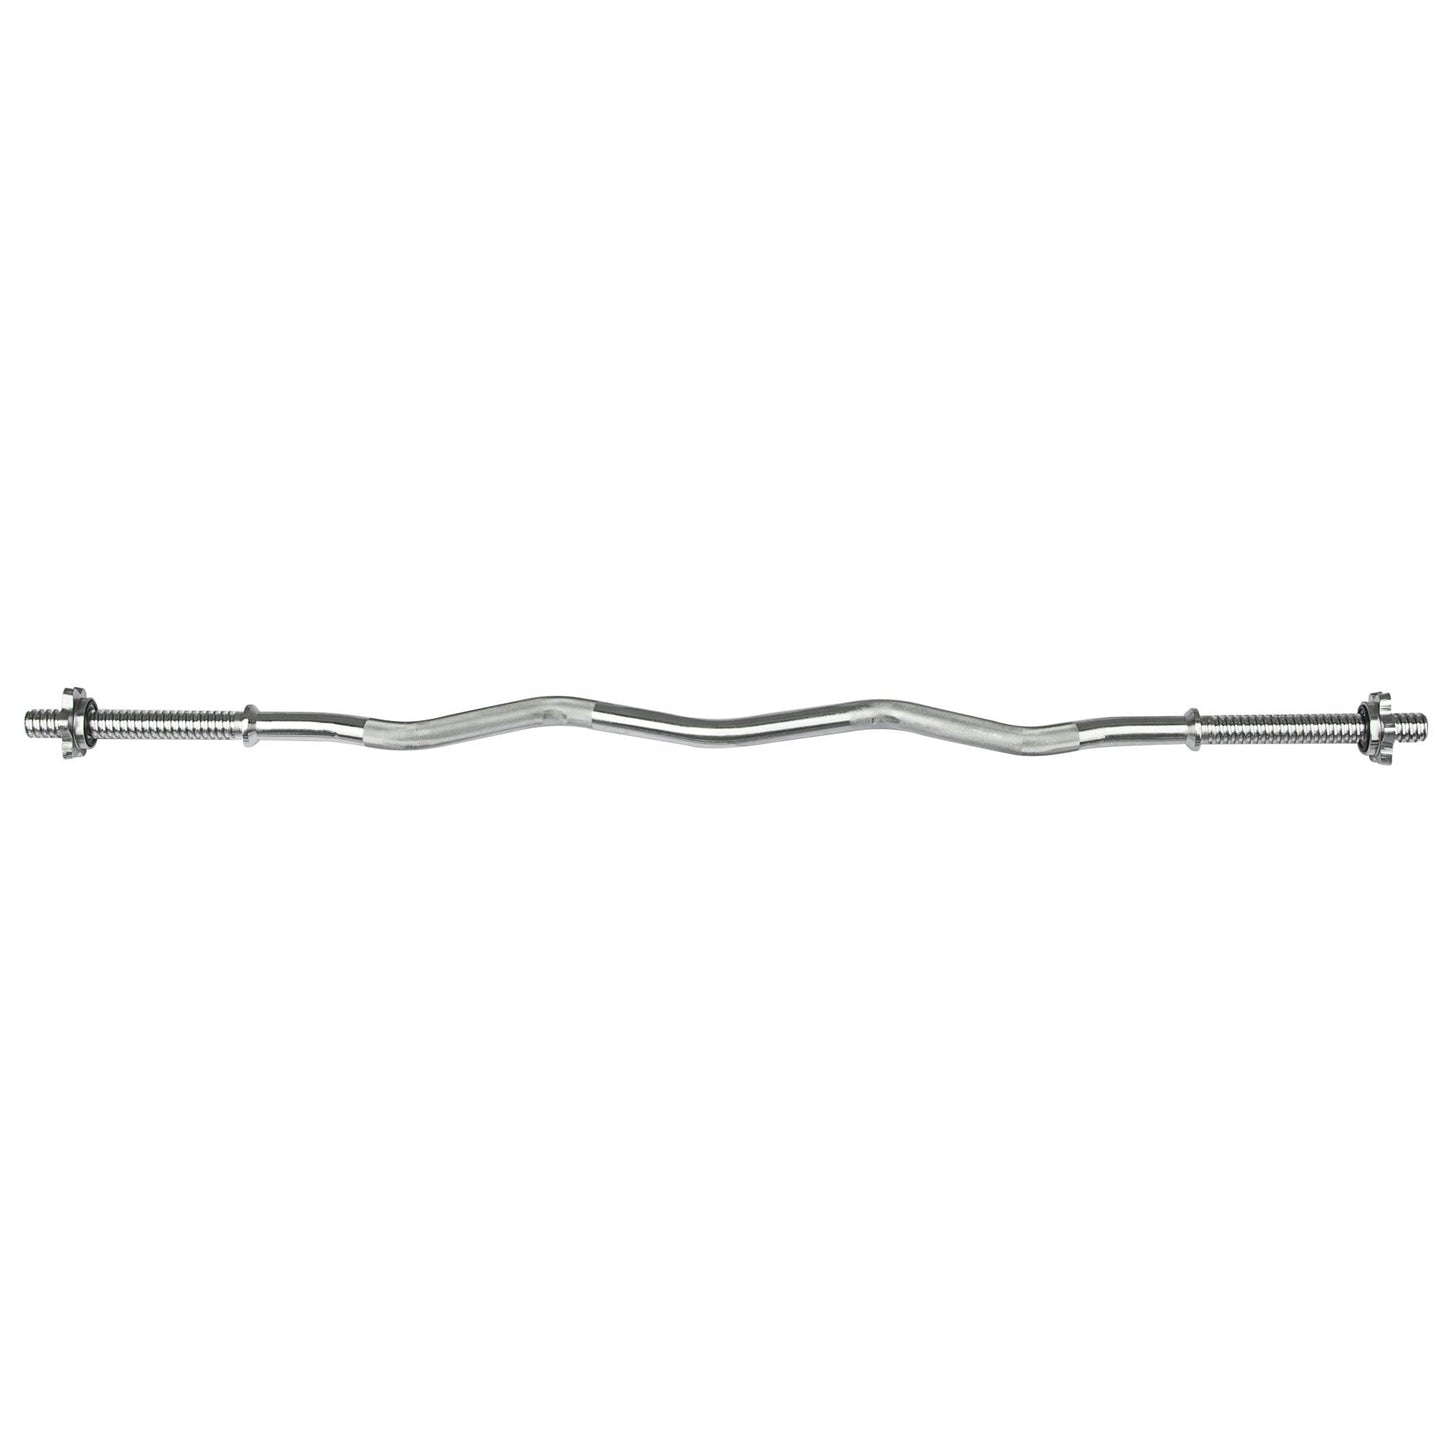 |Viavito 4ft Standard EZ Curl Bar with Spinlock Collars|